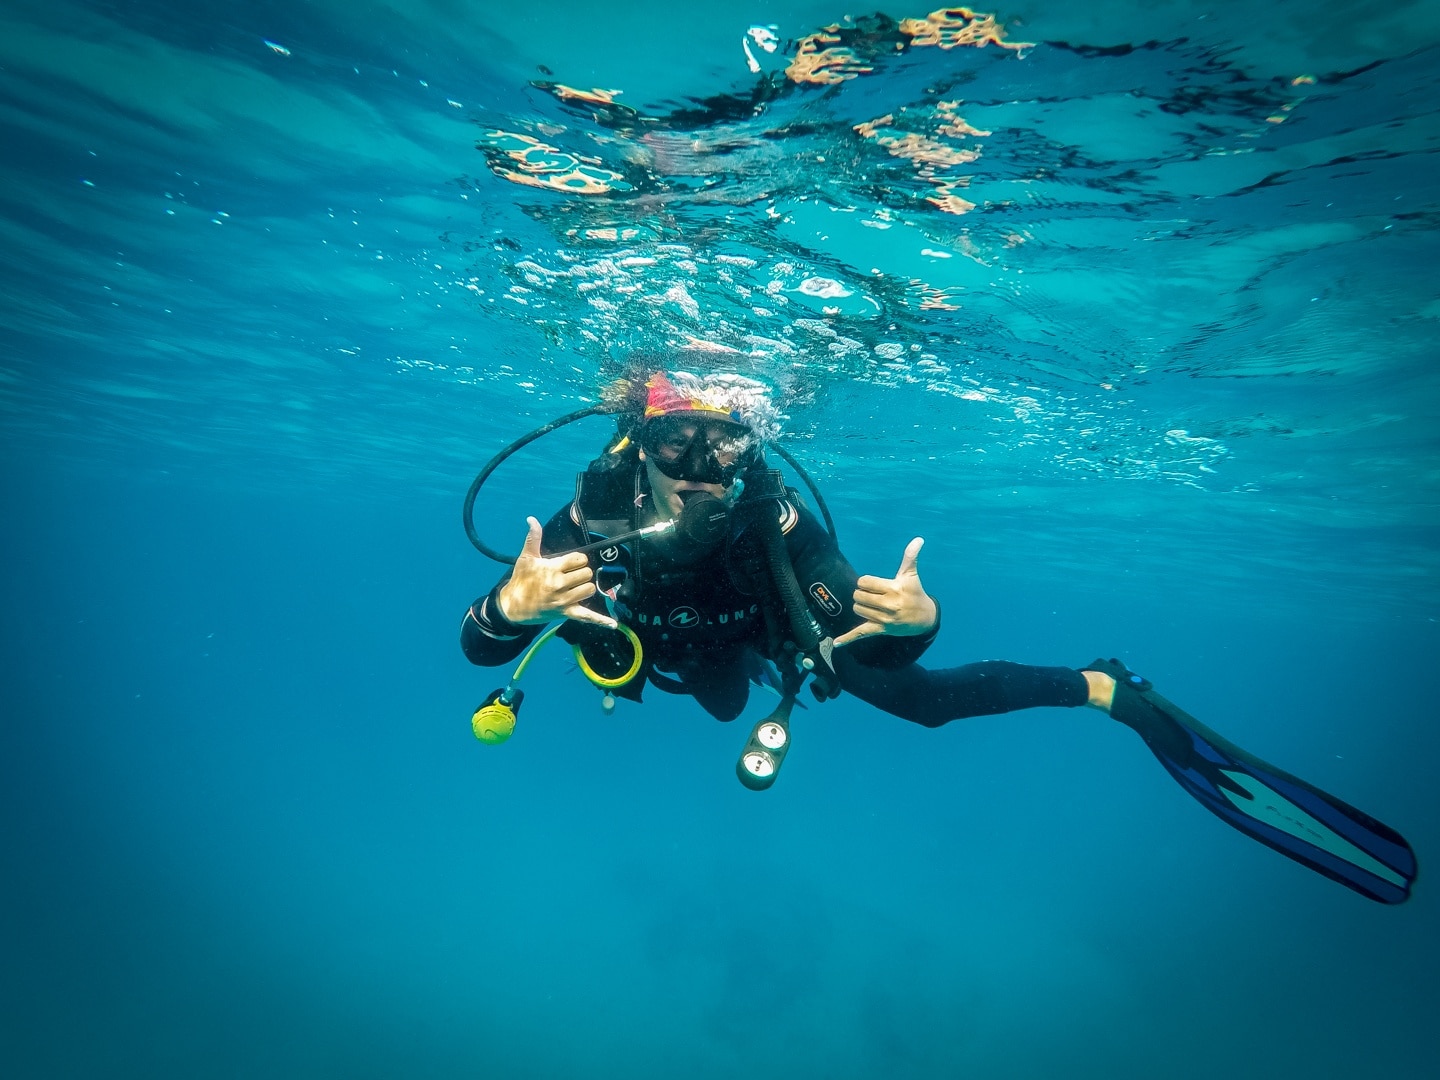 Anna (Editor of Adventure In You) scuba diving